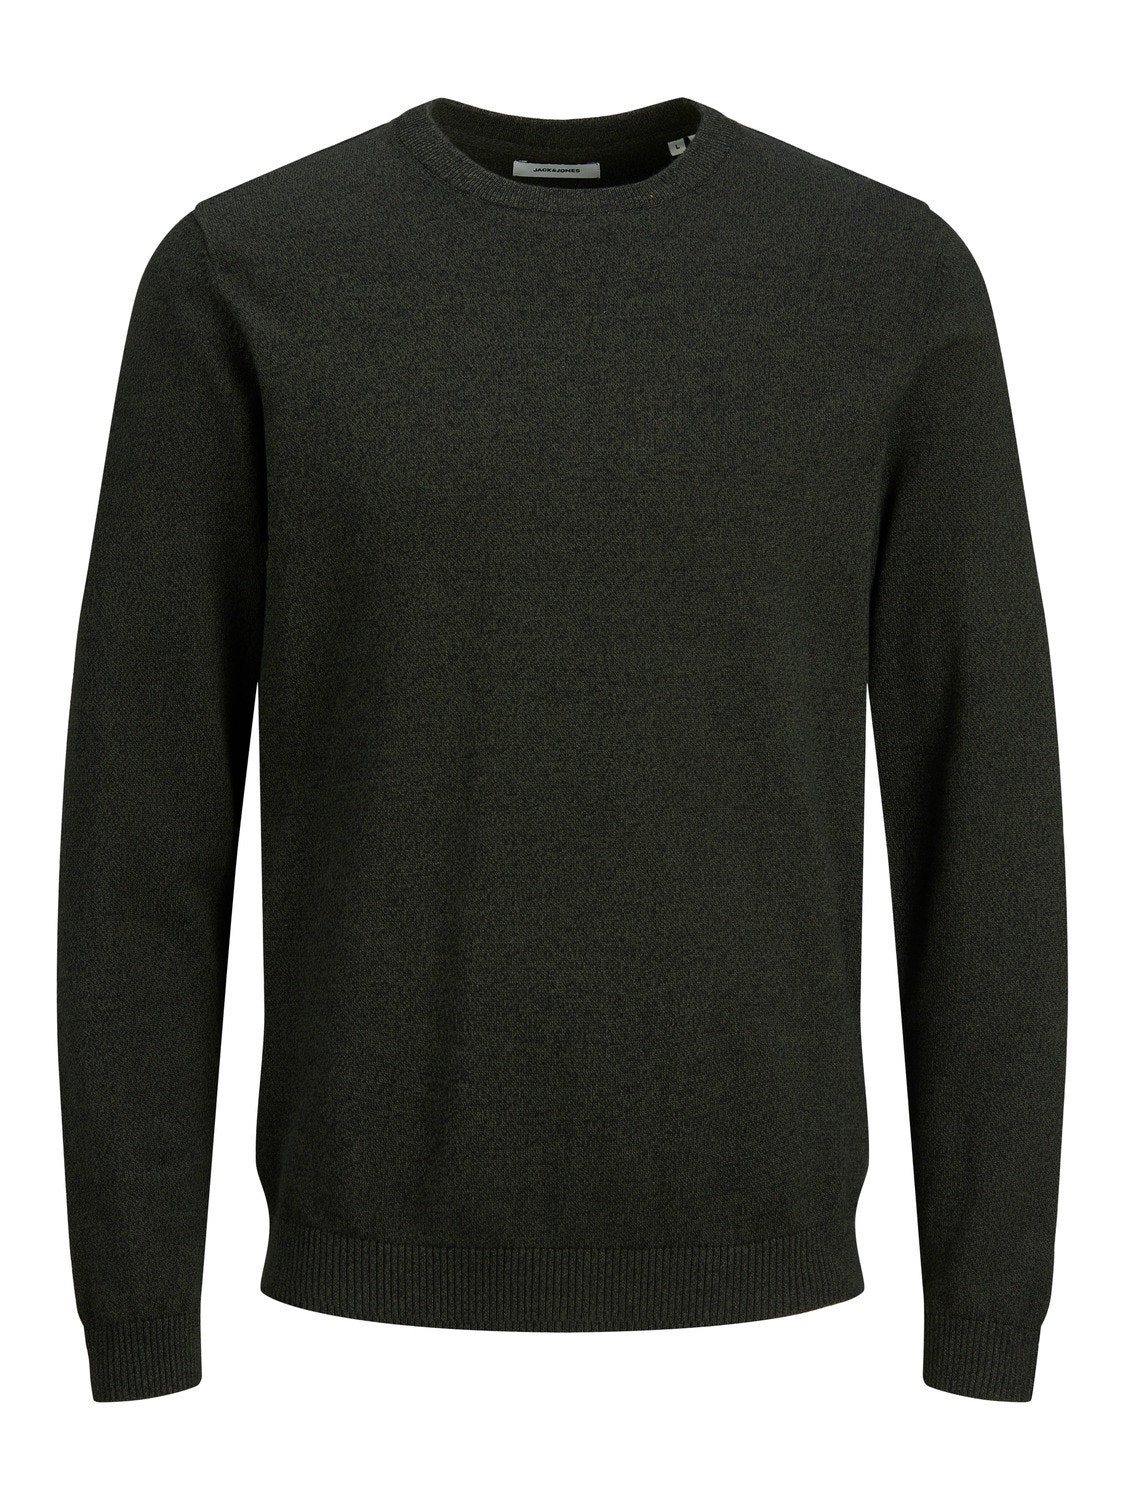 Jack & Jones Plain Knitted pullover -Forest Night - 12137190